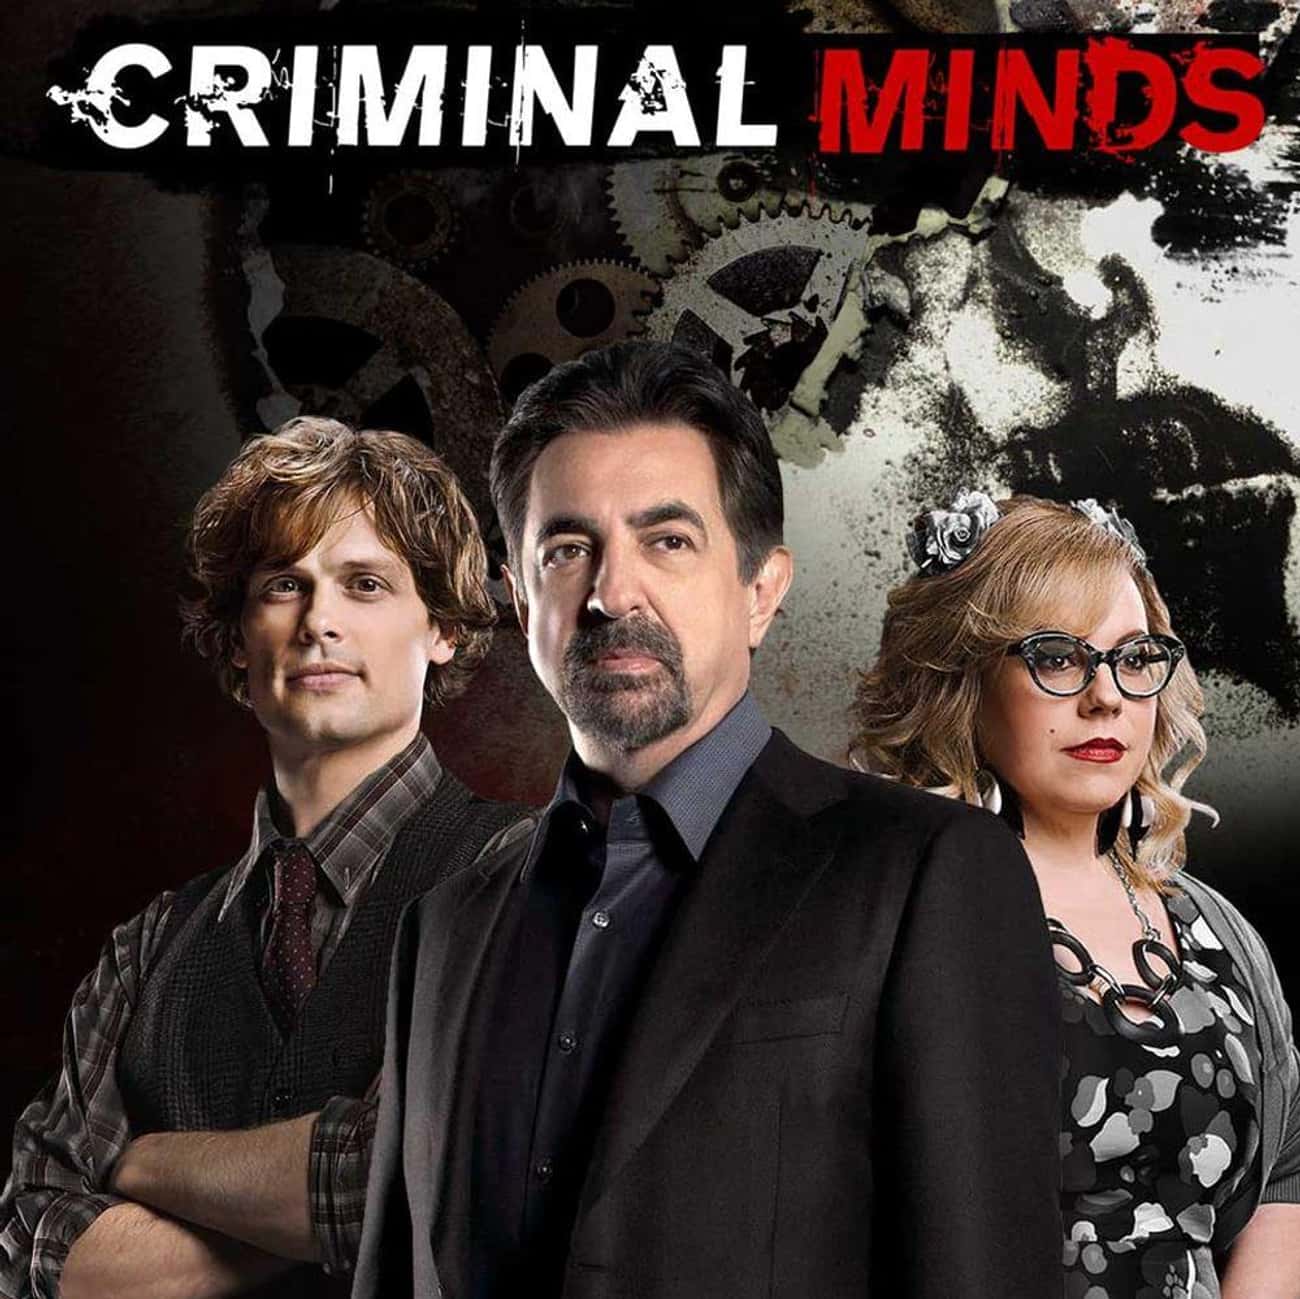 Criminal Minds - Season 14